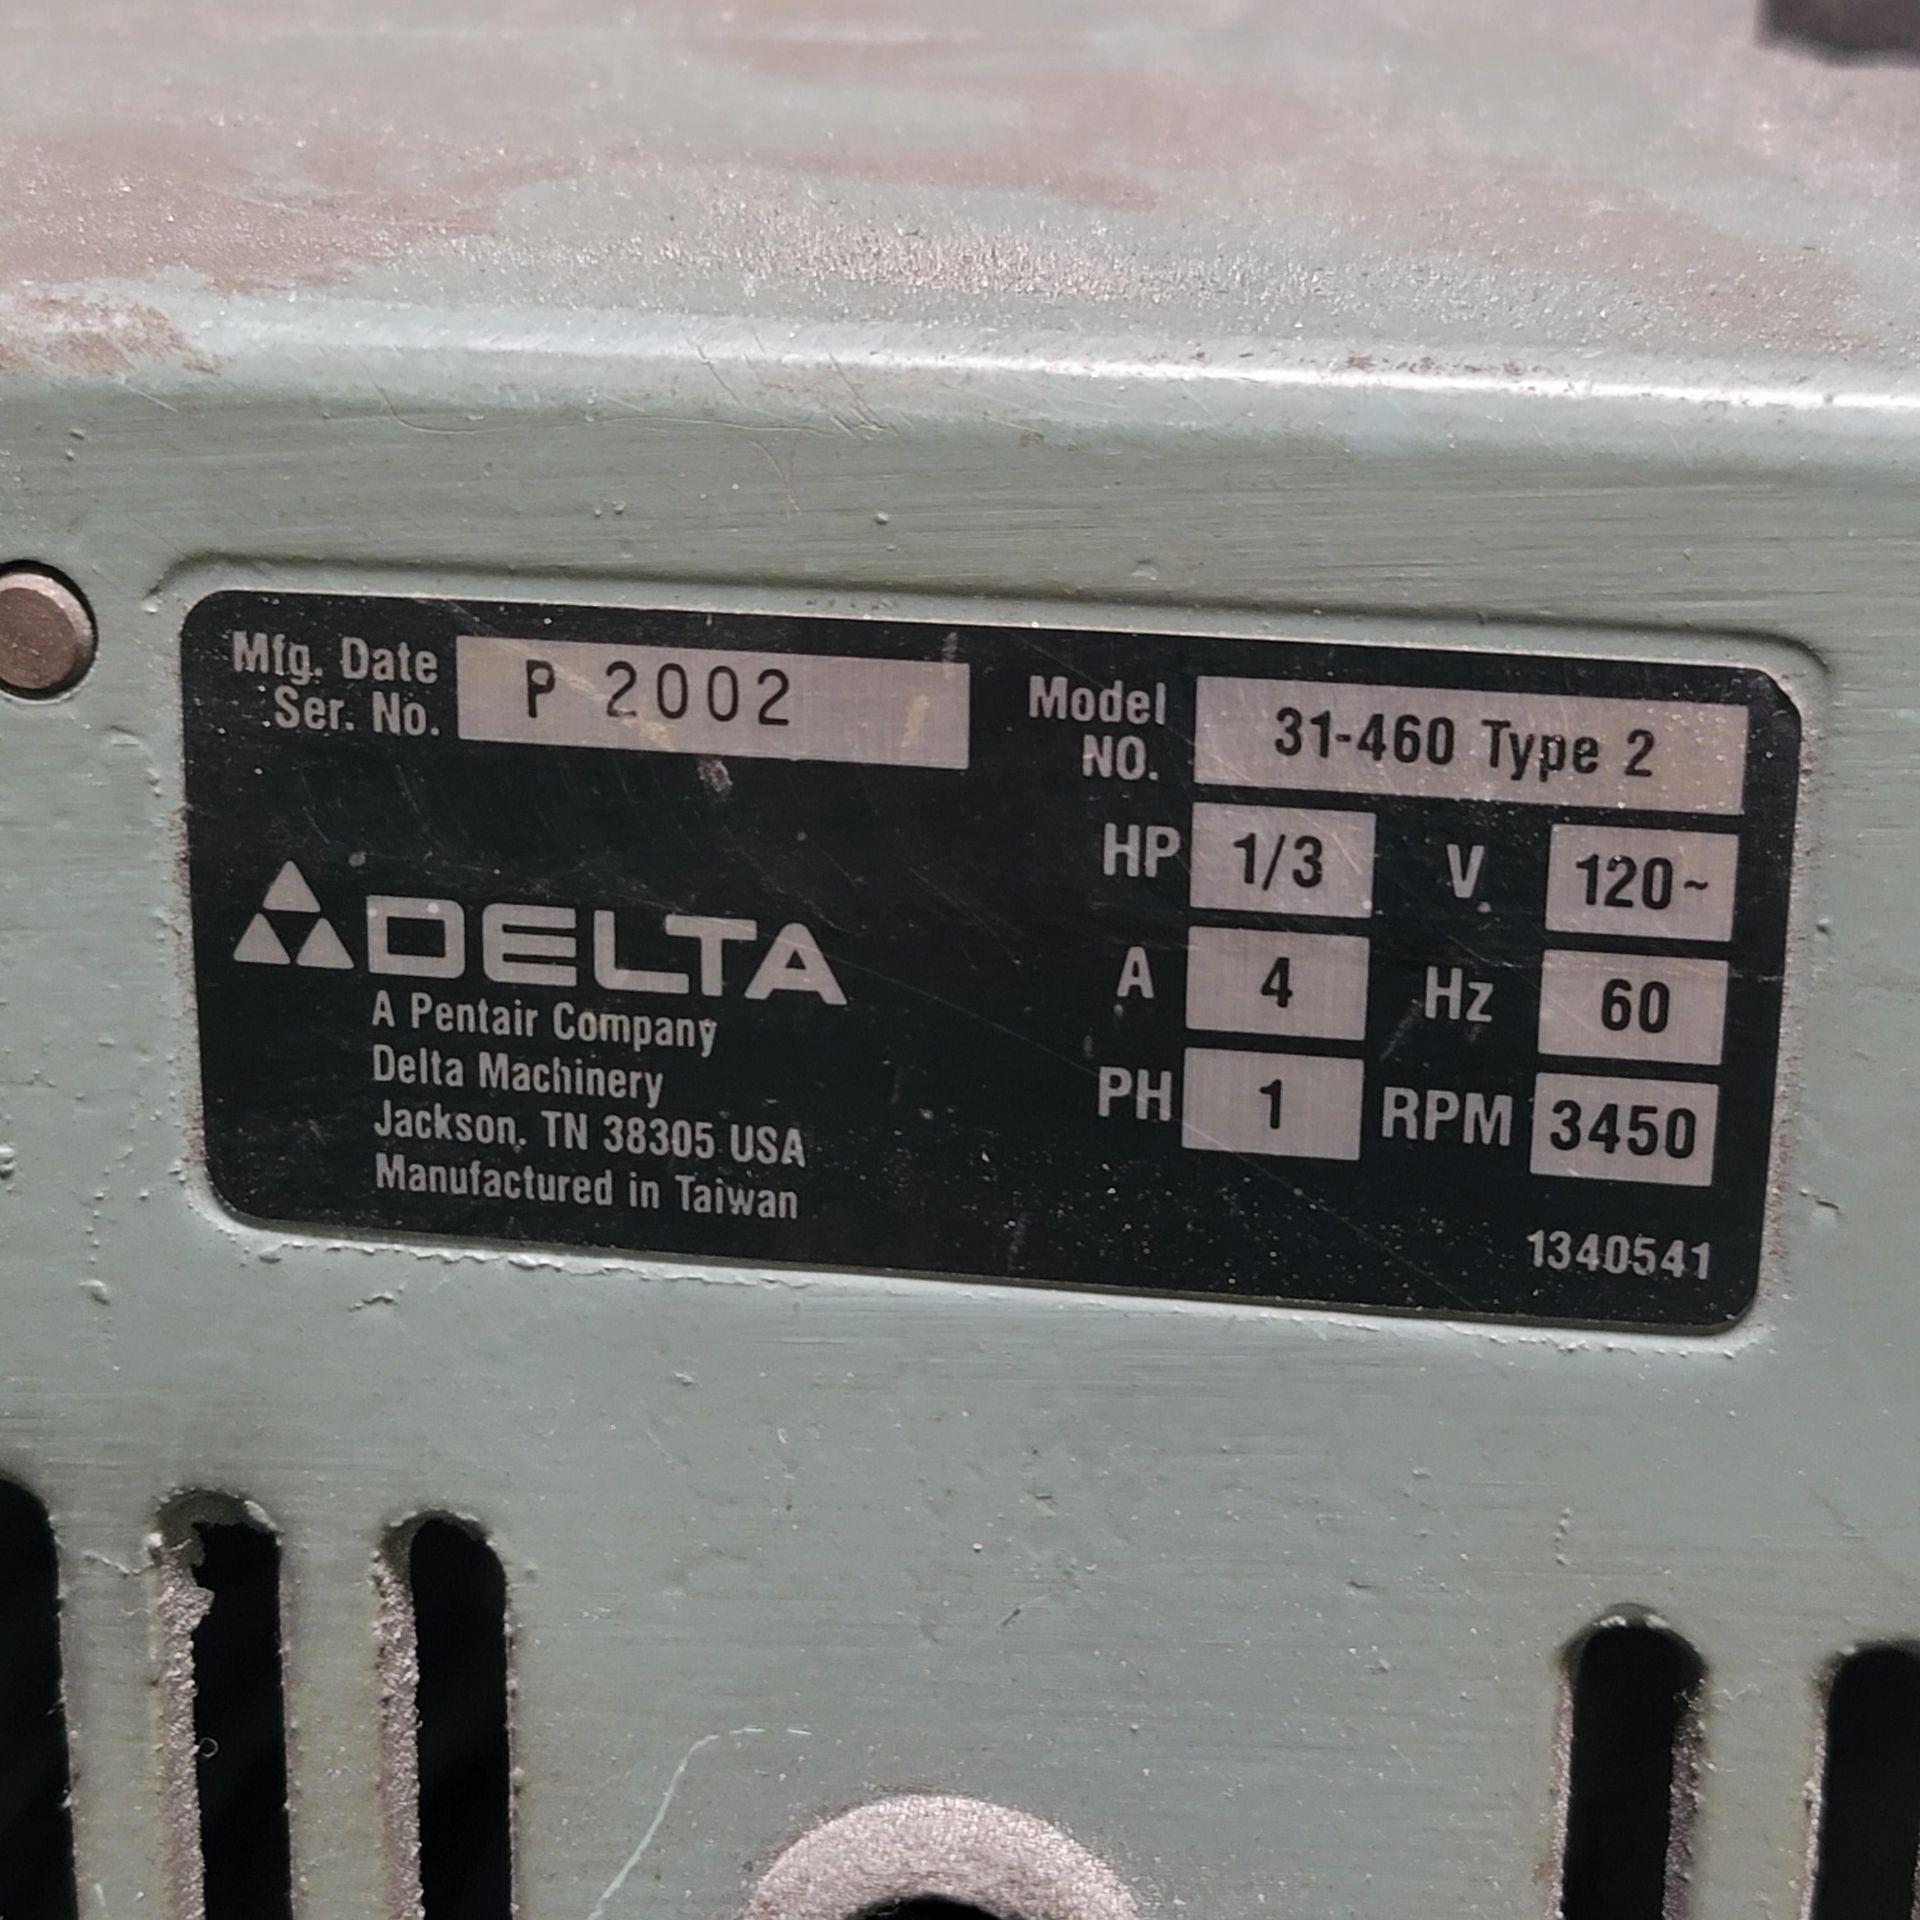 DELTA 4" BELT/6" DISC SANDER, MODEL 31-460 TYPE 2, 120V, SINGLE PHASE, 1/3 HP, S/N P 2002 - Image 4 of 4